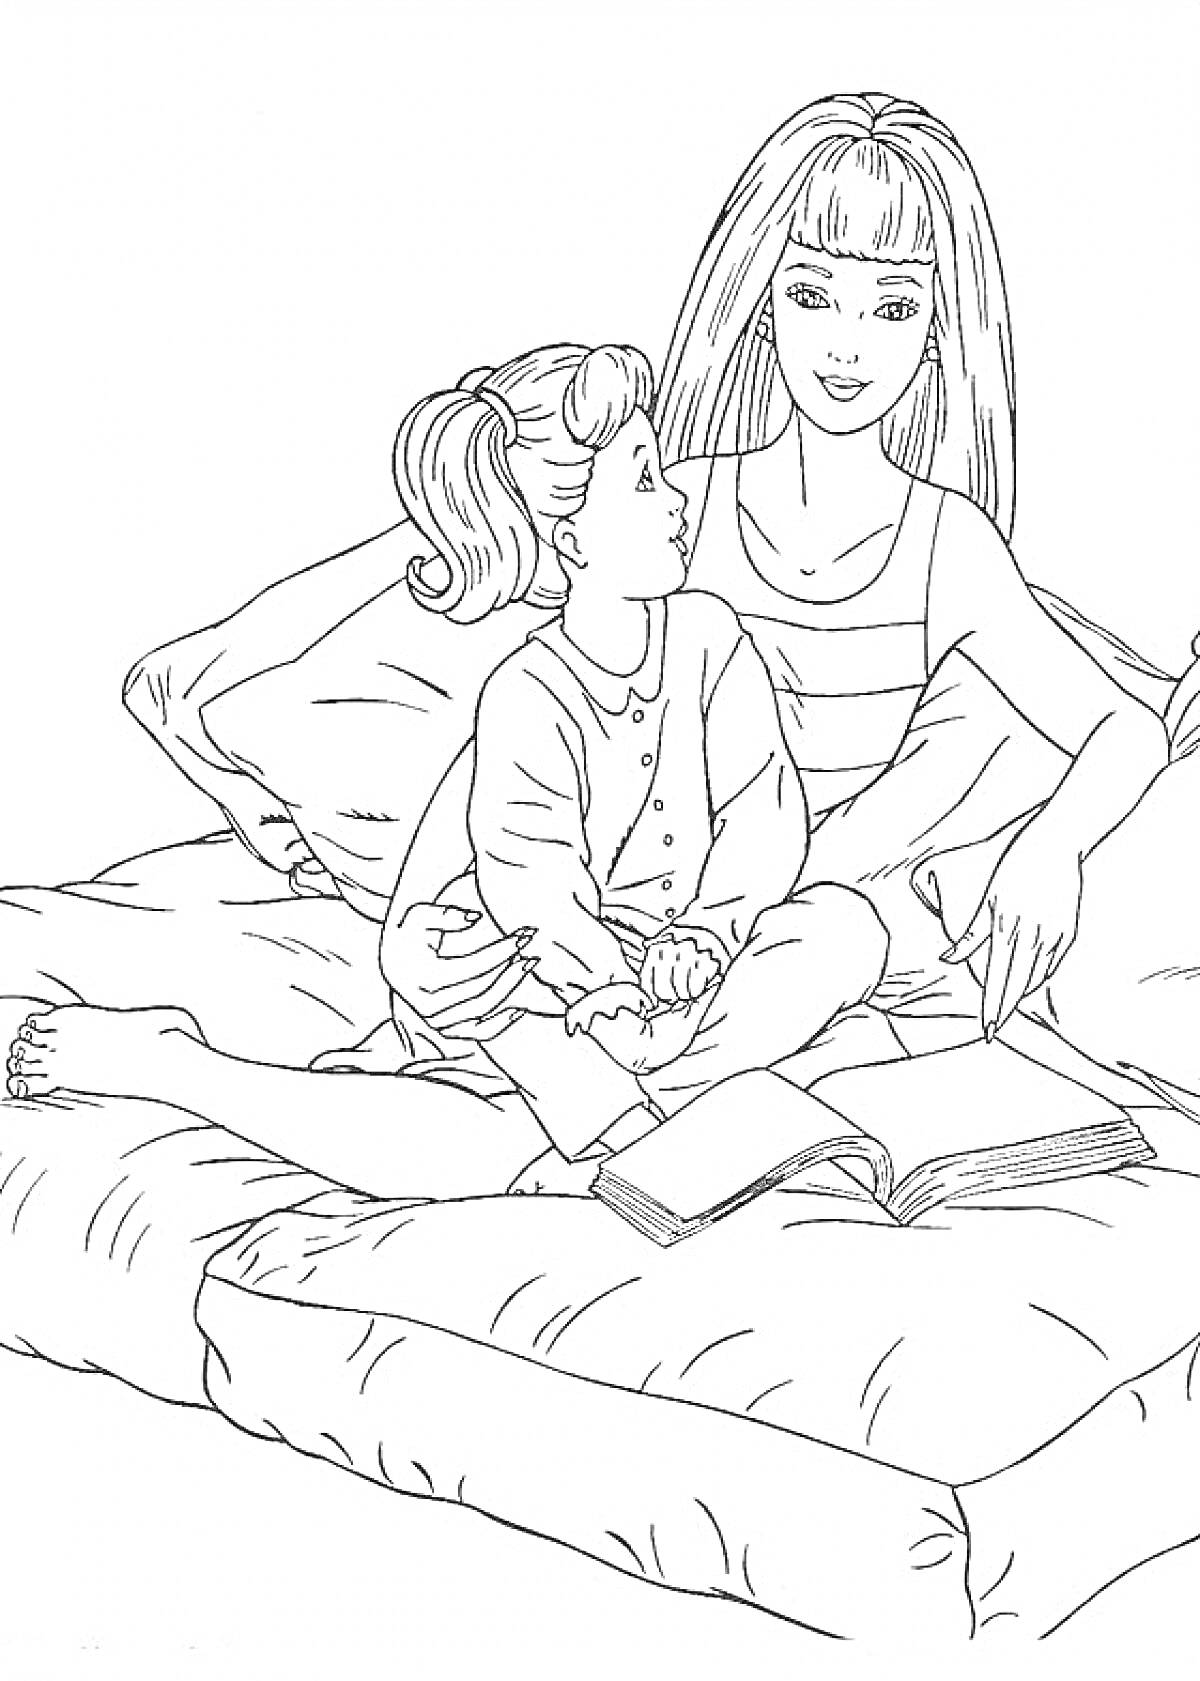 Раскраска Мама и дочка сидят на кровати с подушками, держат книгу-раскраску